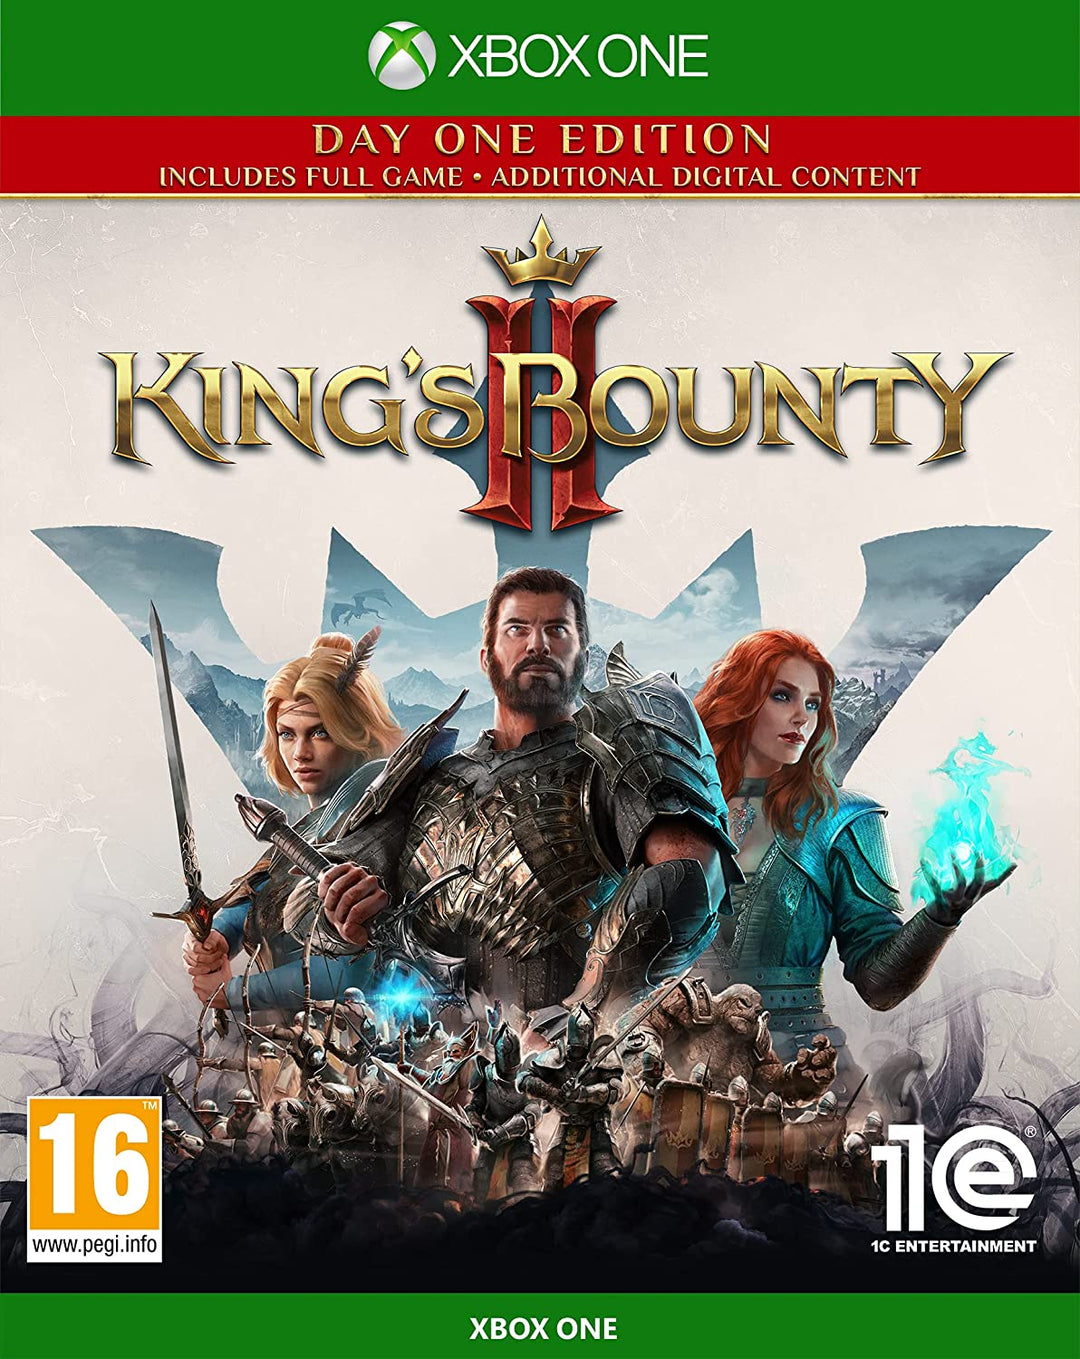 King's Bounty II – Day One Edition (Xbox One)